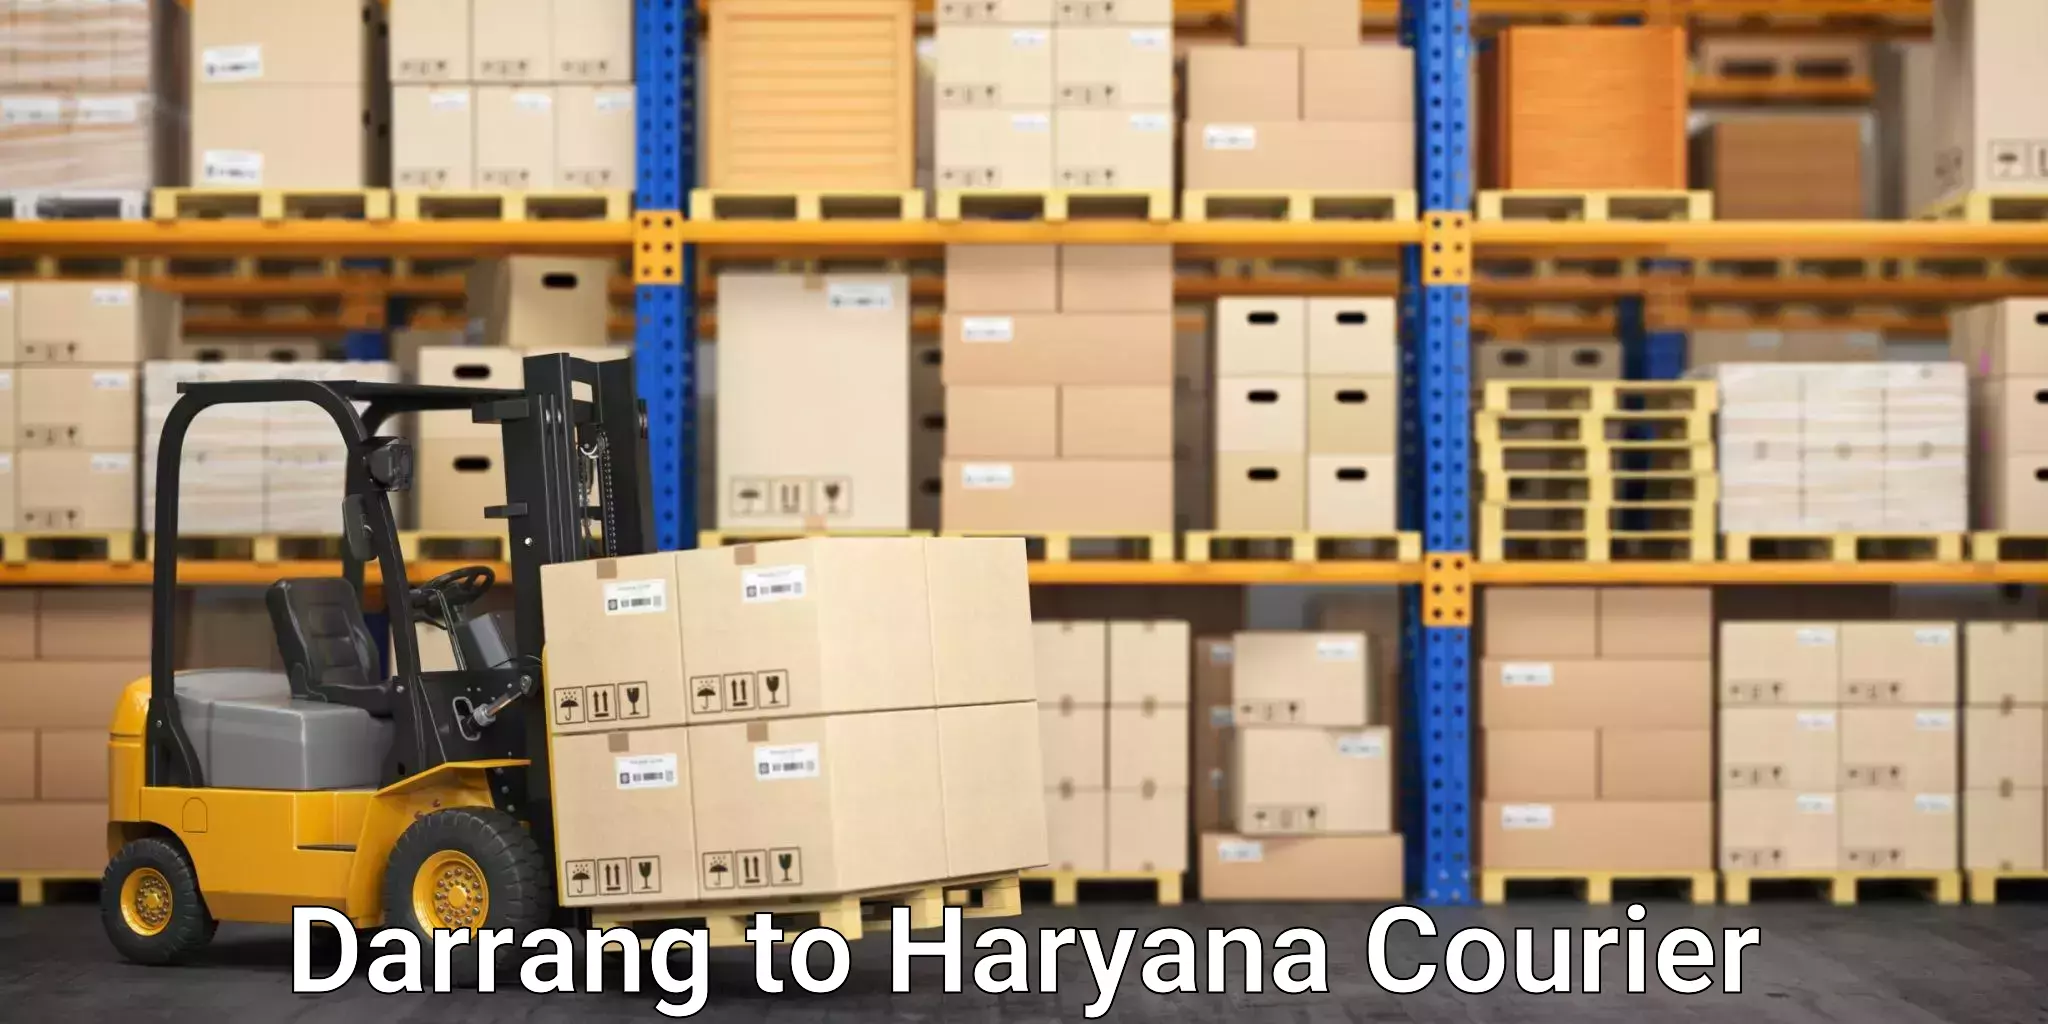 High-priority parcel service Darrang to Loharu